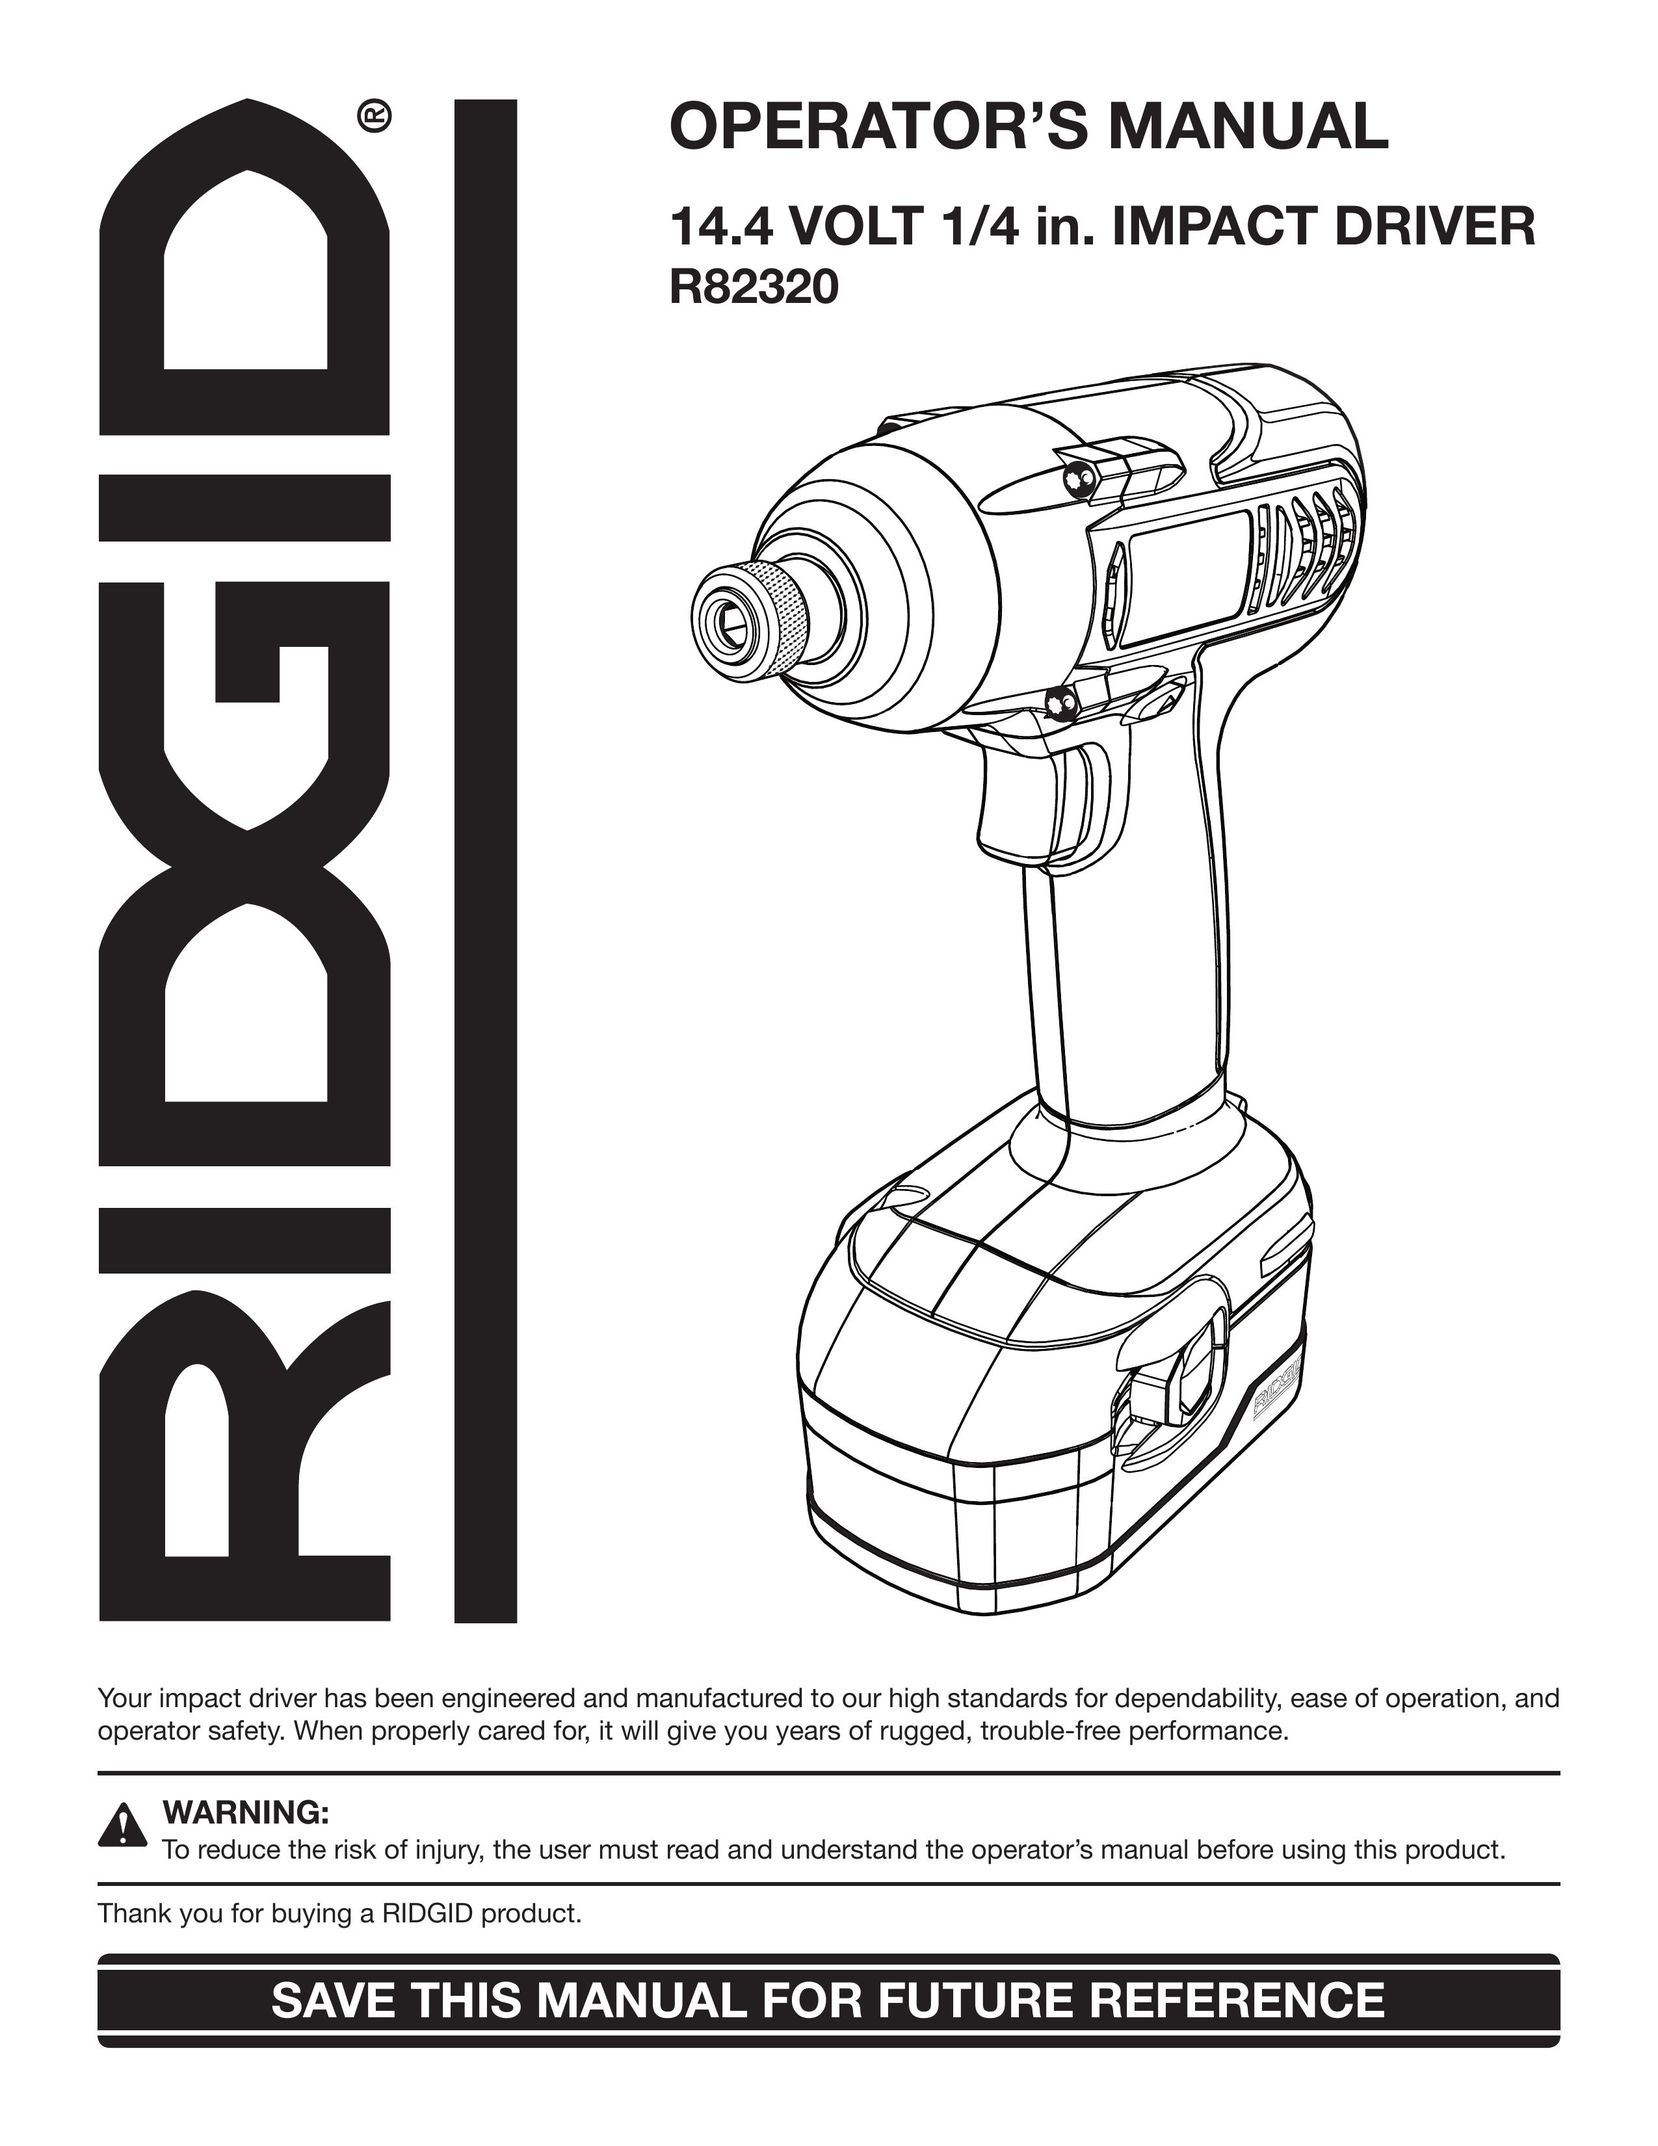 RIDGID R82320 Impact Driver User Manual